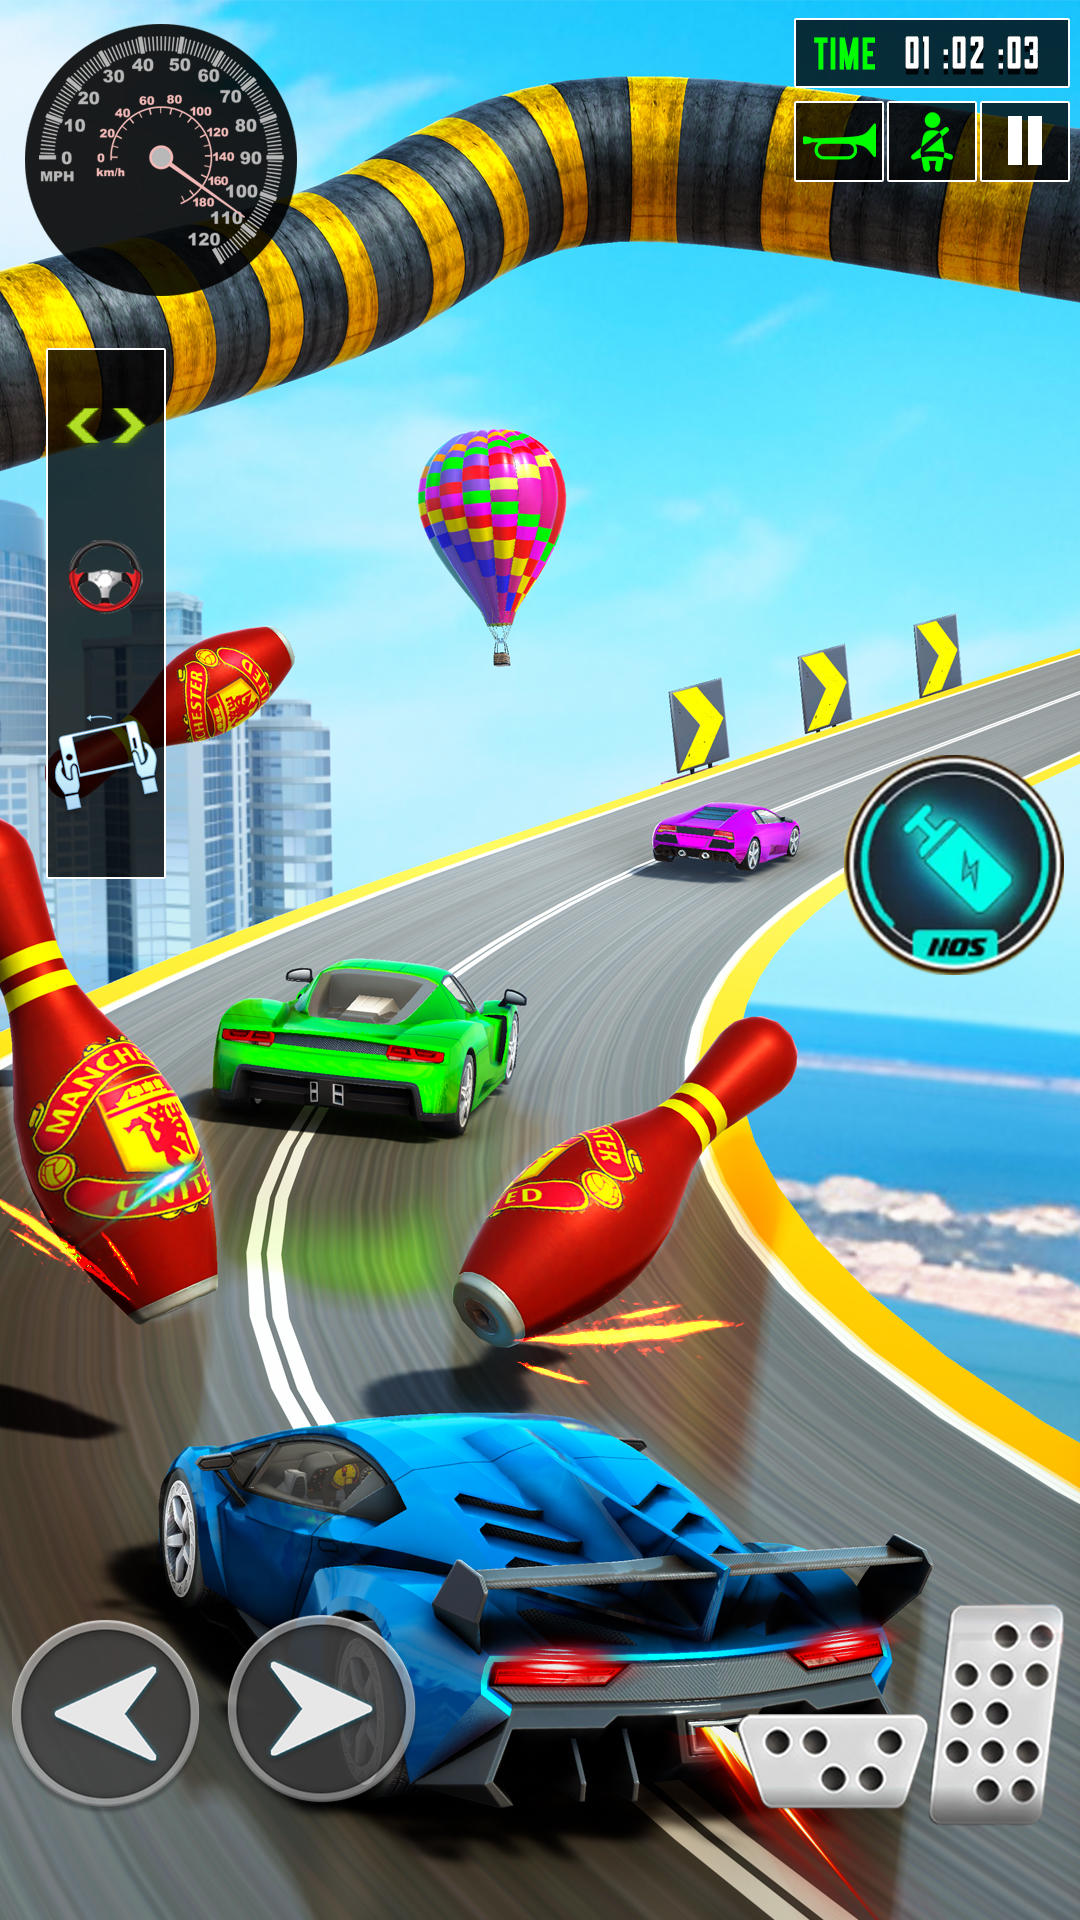 Simple Car Crash Physics Sim APK (Android Game) - Free Download